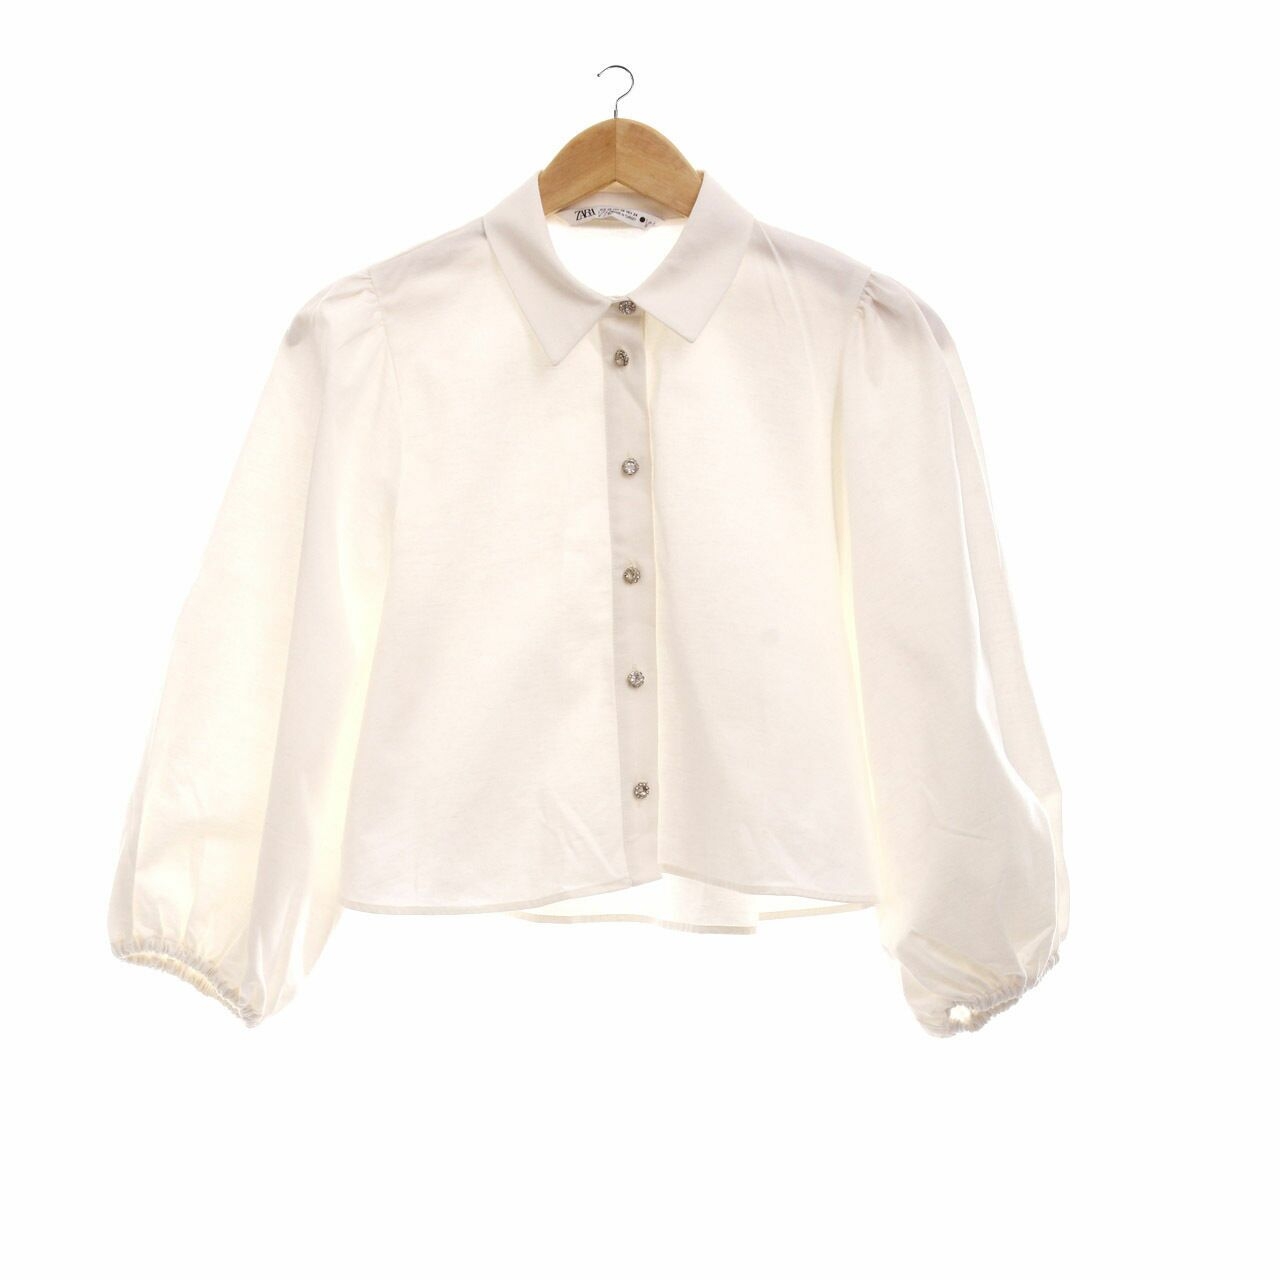 Zara White Long Sleeve Shirt